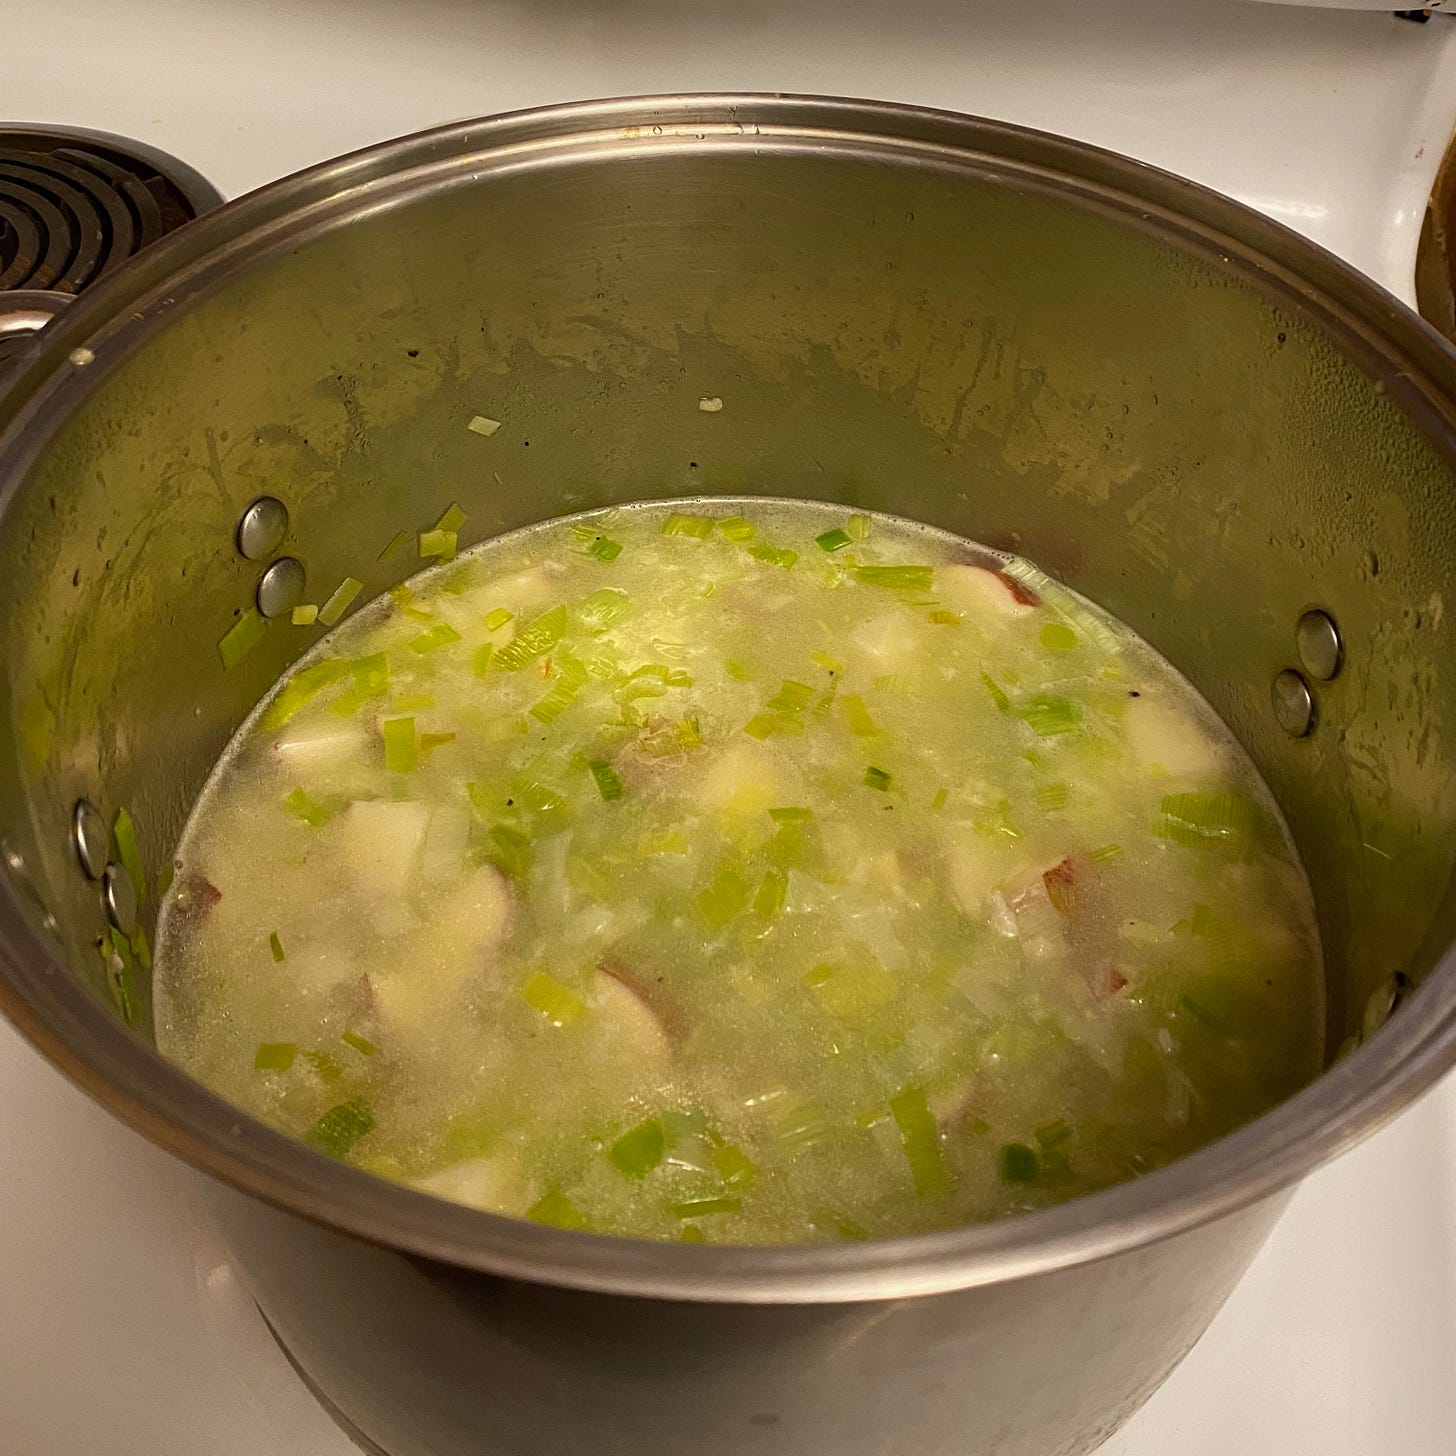 A pot of potato leek soup simmer on the stove.